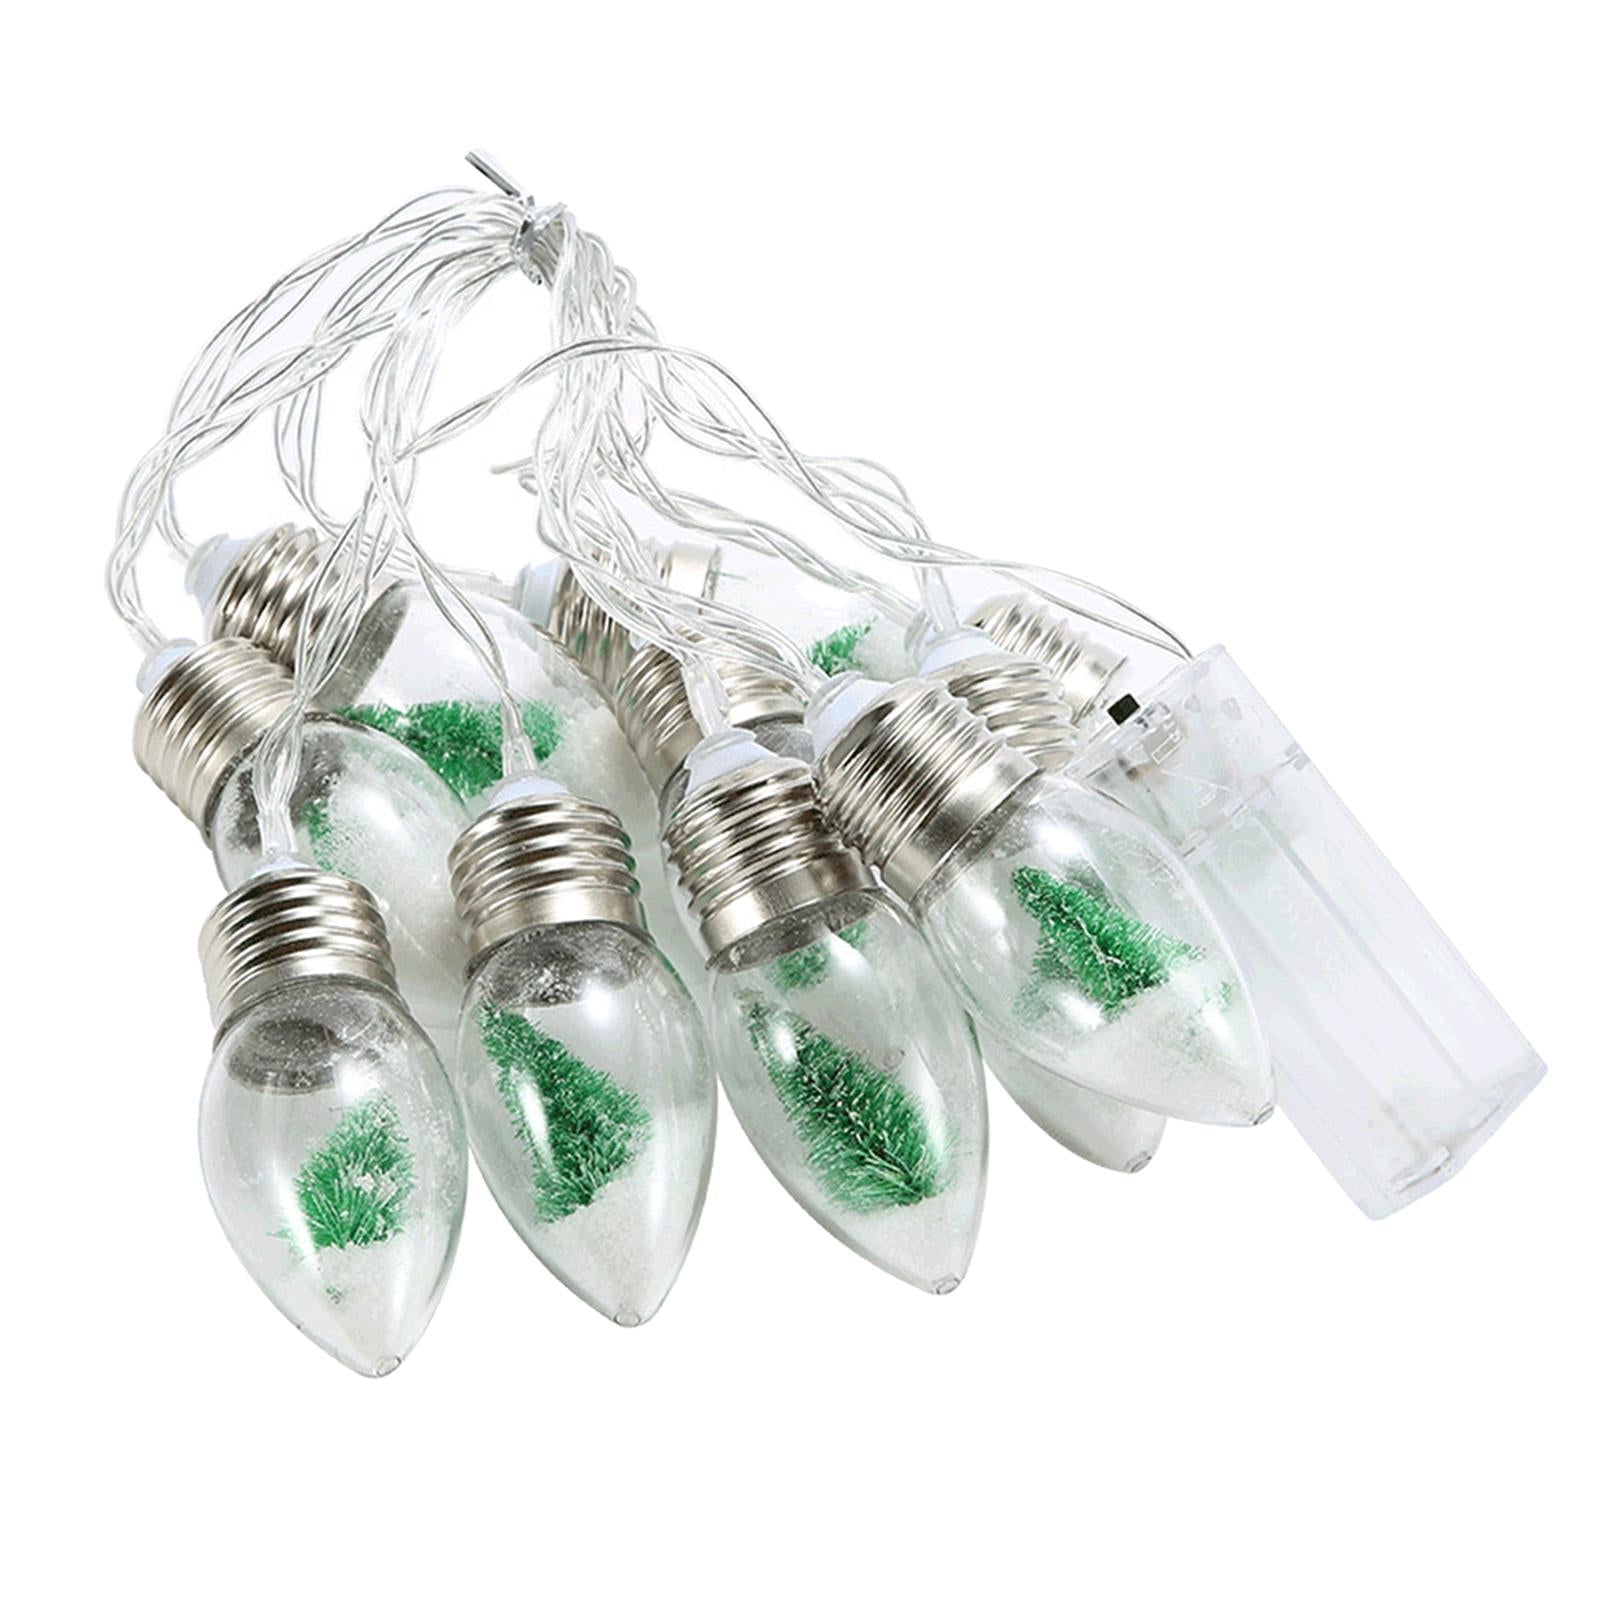 10 LED Wine Bottle Light String Fairy Wire Night Light for Home Wedding 1.5m